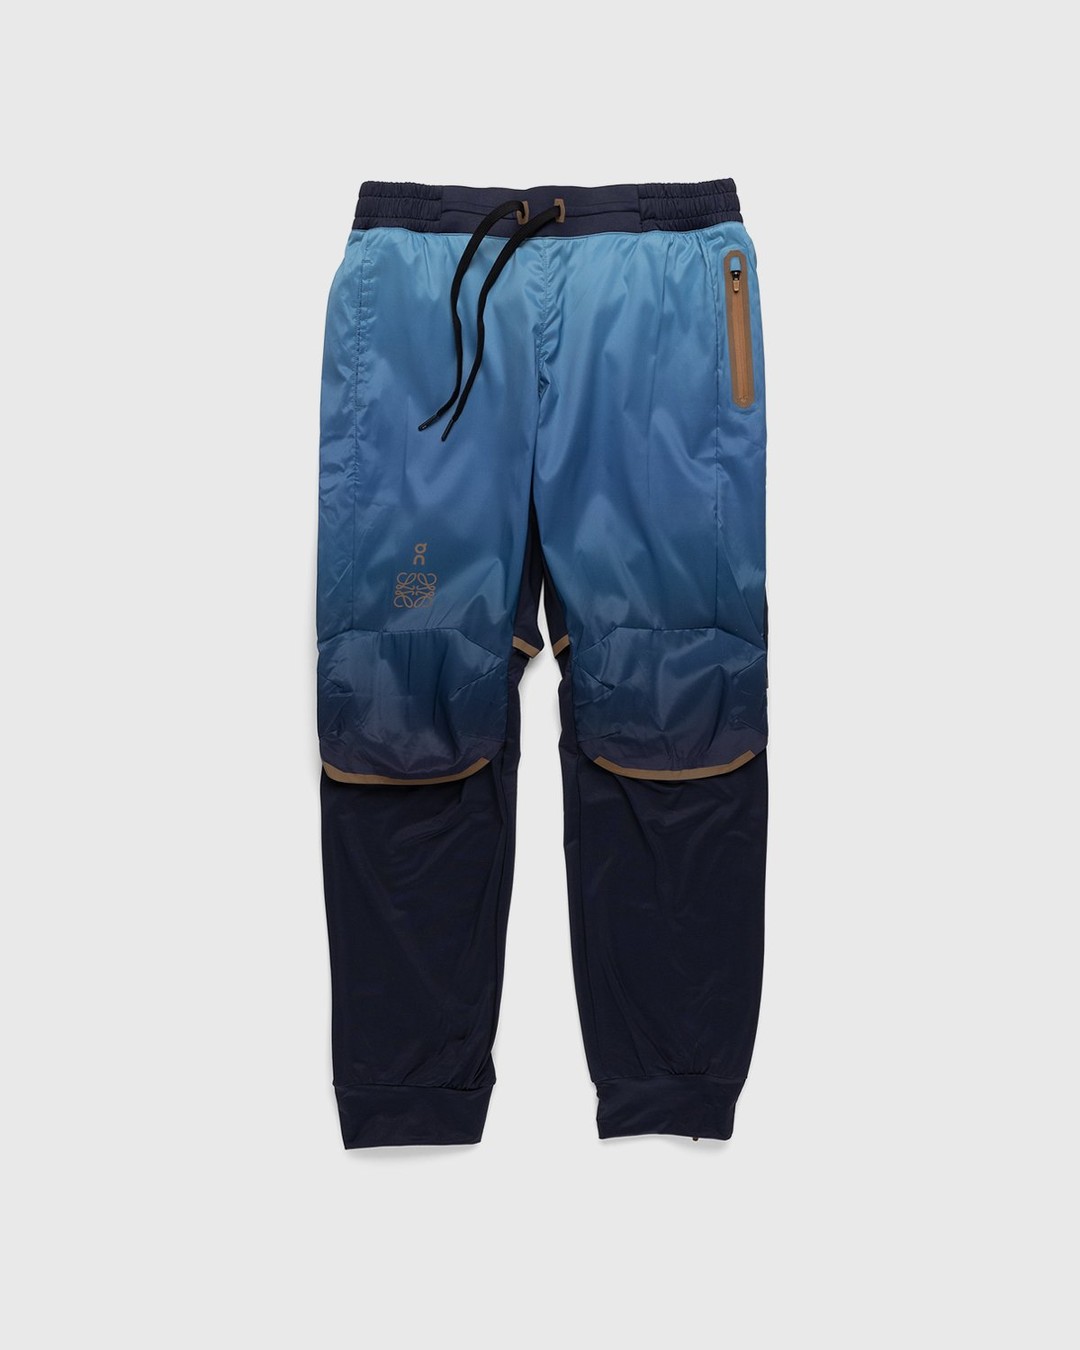 Loewe x On – Women's Technical Running Pants Gradient Blue - Active Pants - Blue - Image 1